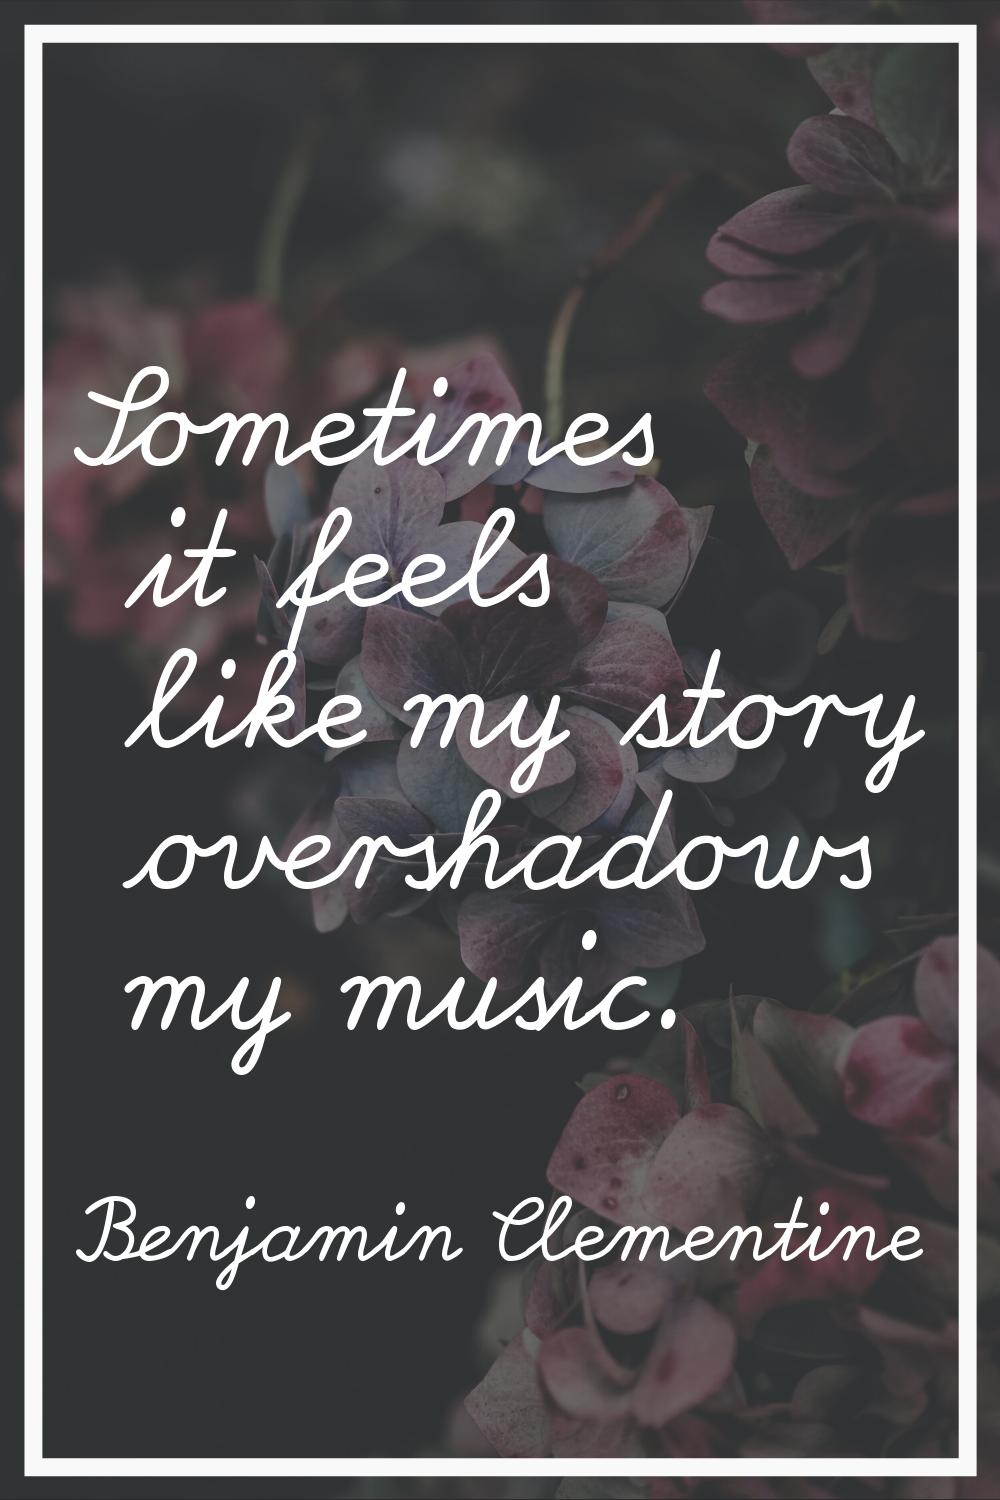 Sometimes it feels like my story overshadows my music.